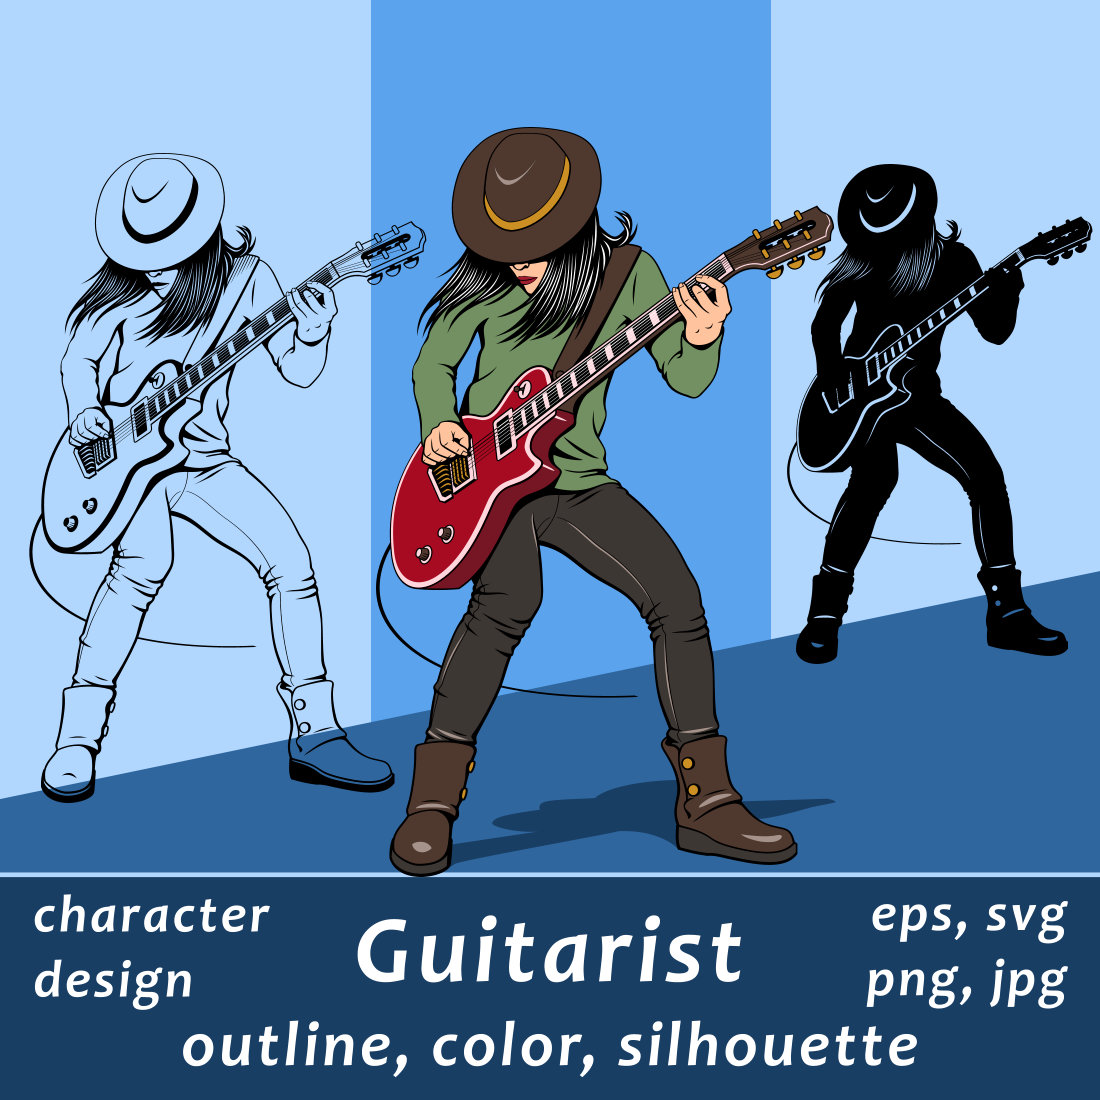 Rock Guitarist Girl Character Design cover image.